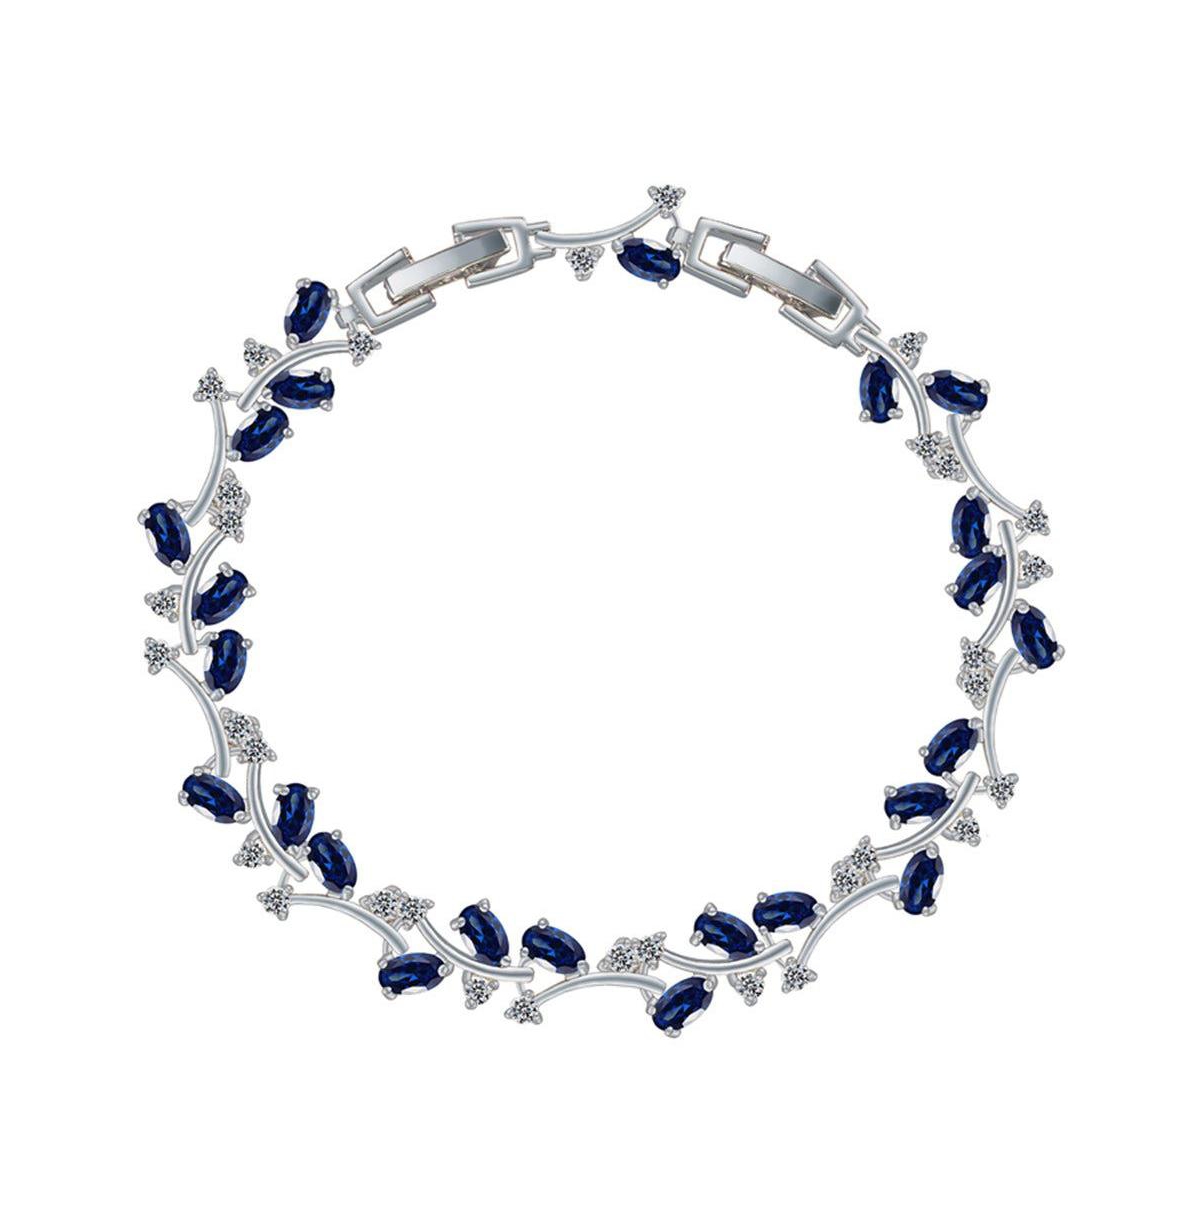 Cubic Zirconia Tennis Bracelet with Sapphire, Cubic Zirconia Stones - Silver